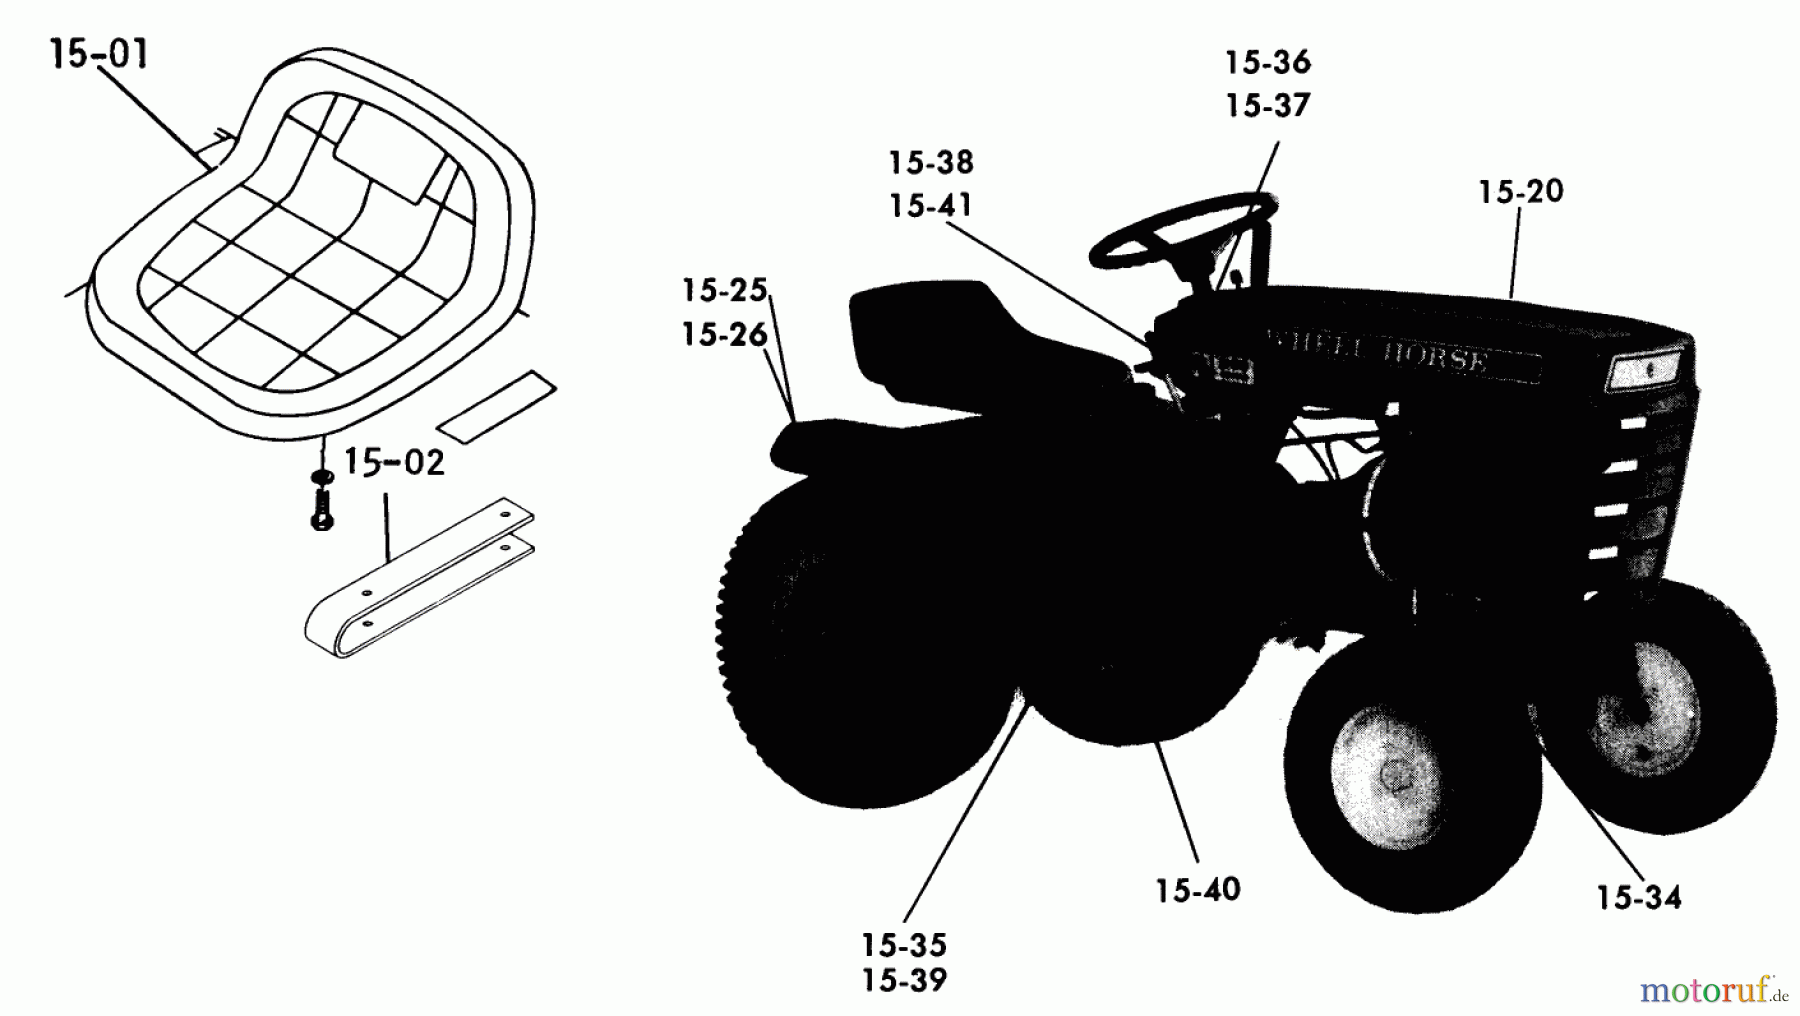  Toro Neu Mowers, Lawn & Garden Tractor Seite 1 1-0141 (B-80) - Toro B-80 4-Speed Tractor, 1975 B-100 PARTS MANUAL 15.000 SEATS, DECALS, MISC. TRIM (FIG. 15)